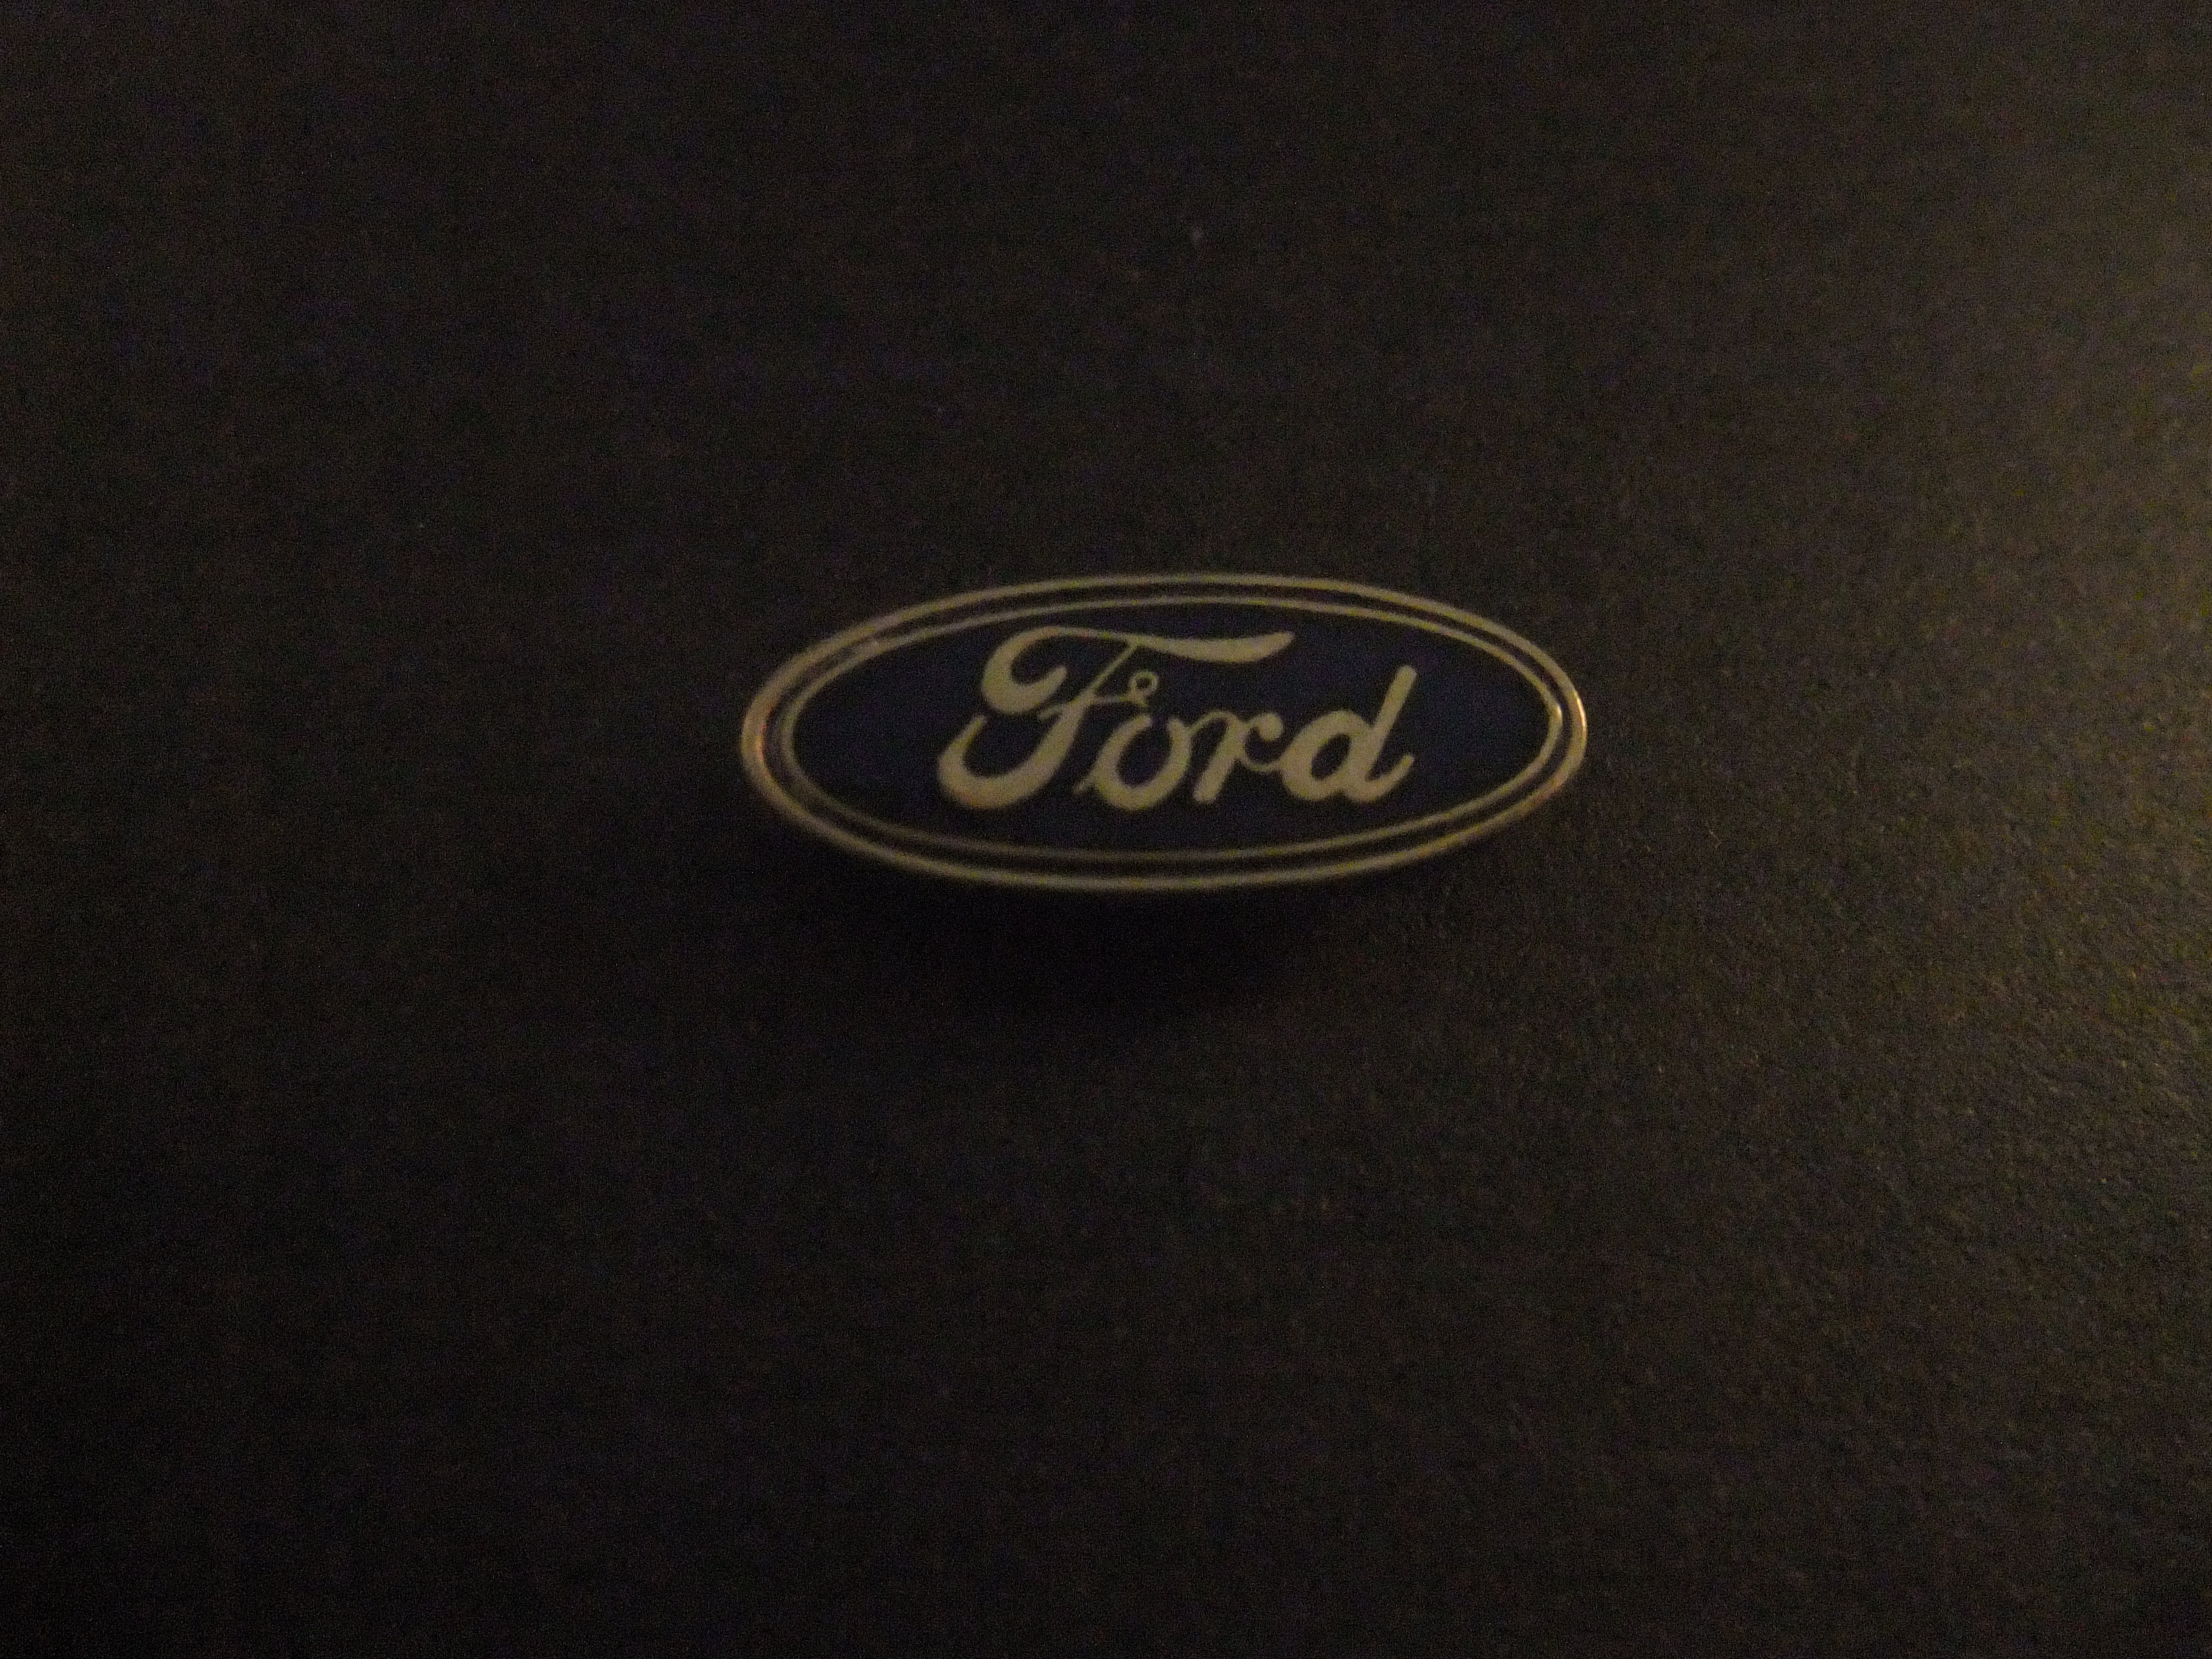 Ford logo twee ringen zilverkleurige letters ovaal model,